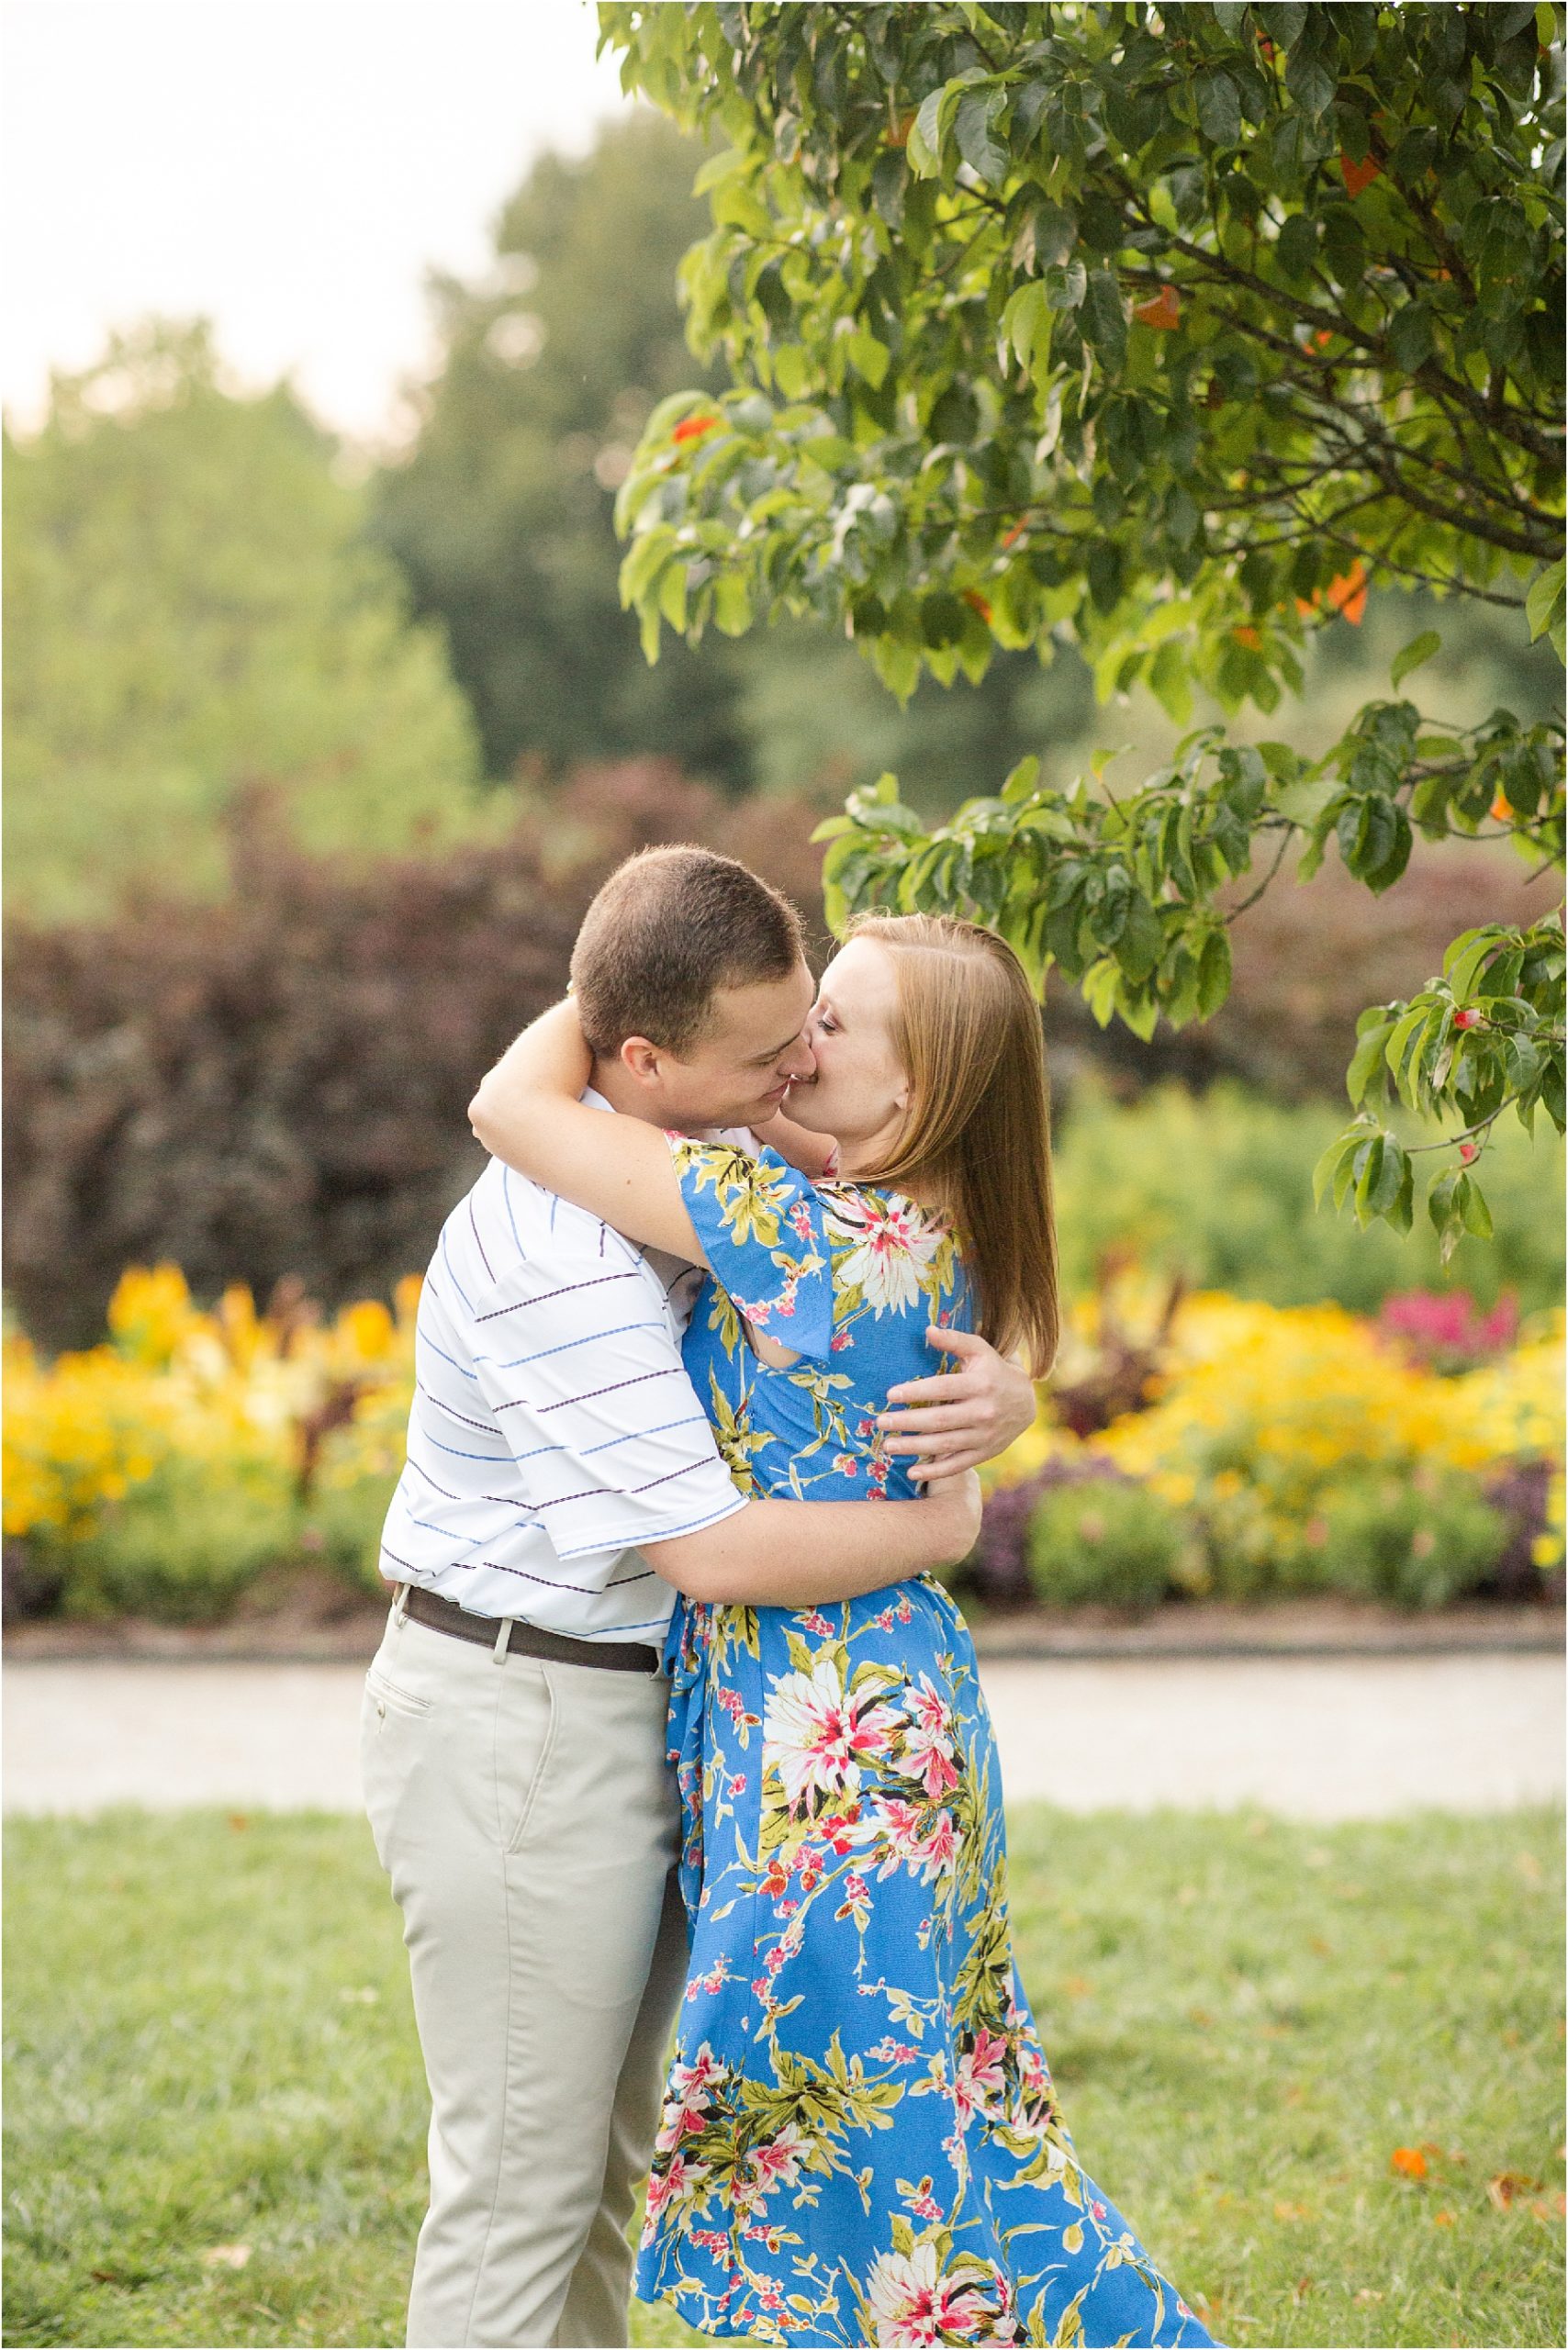 Kentucky engaged couple kissing in garden